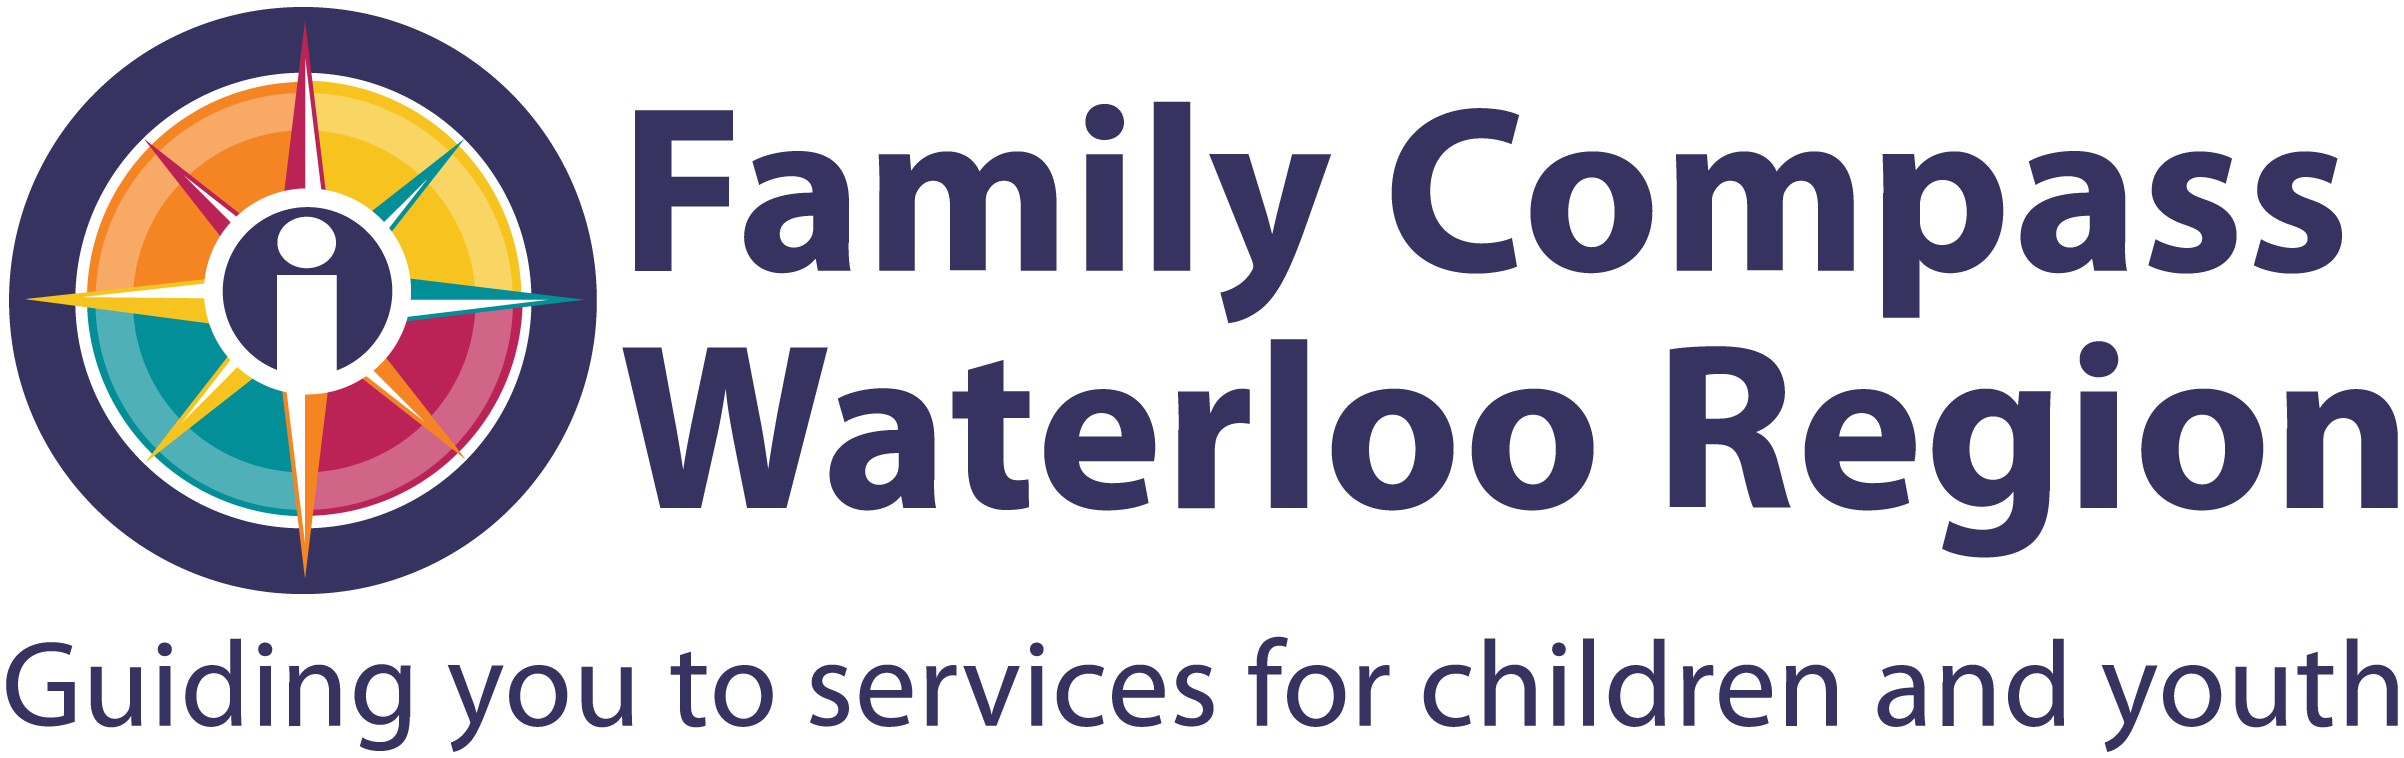 Family Compass Waterloo Region